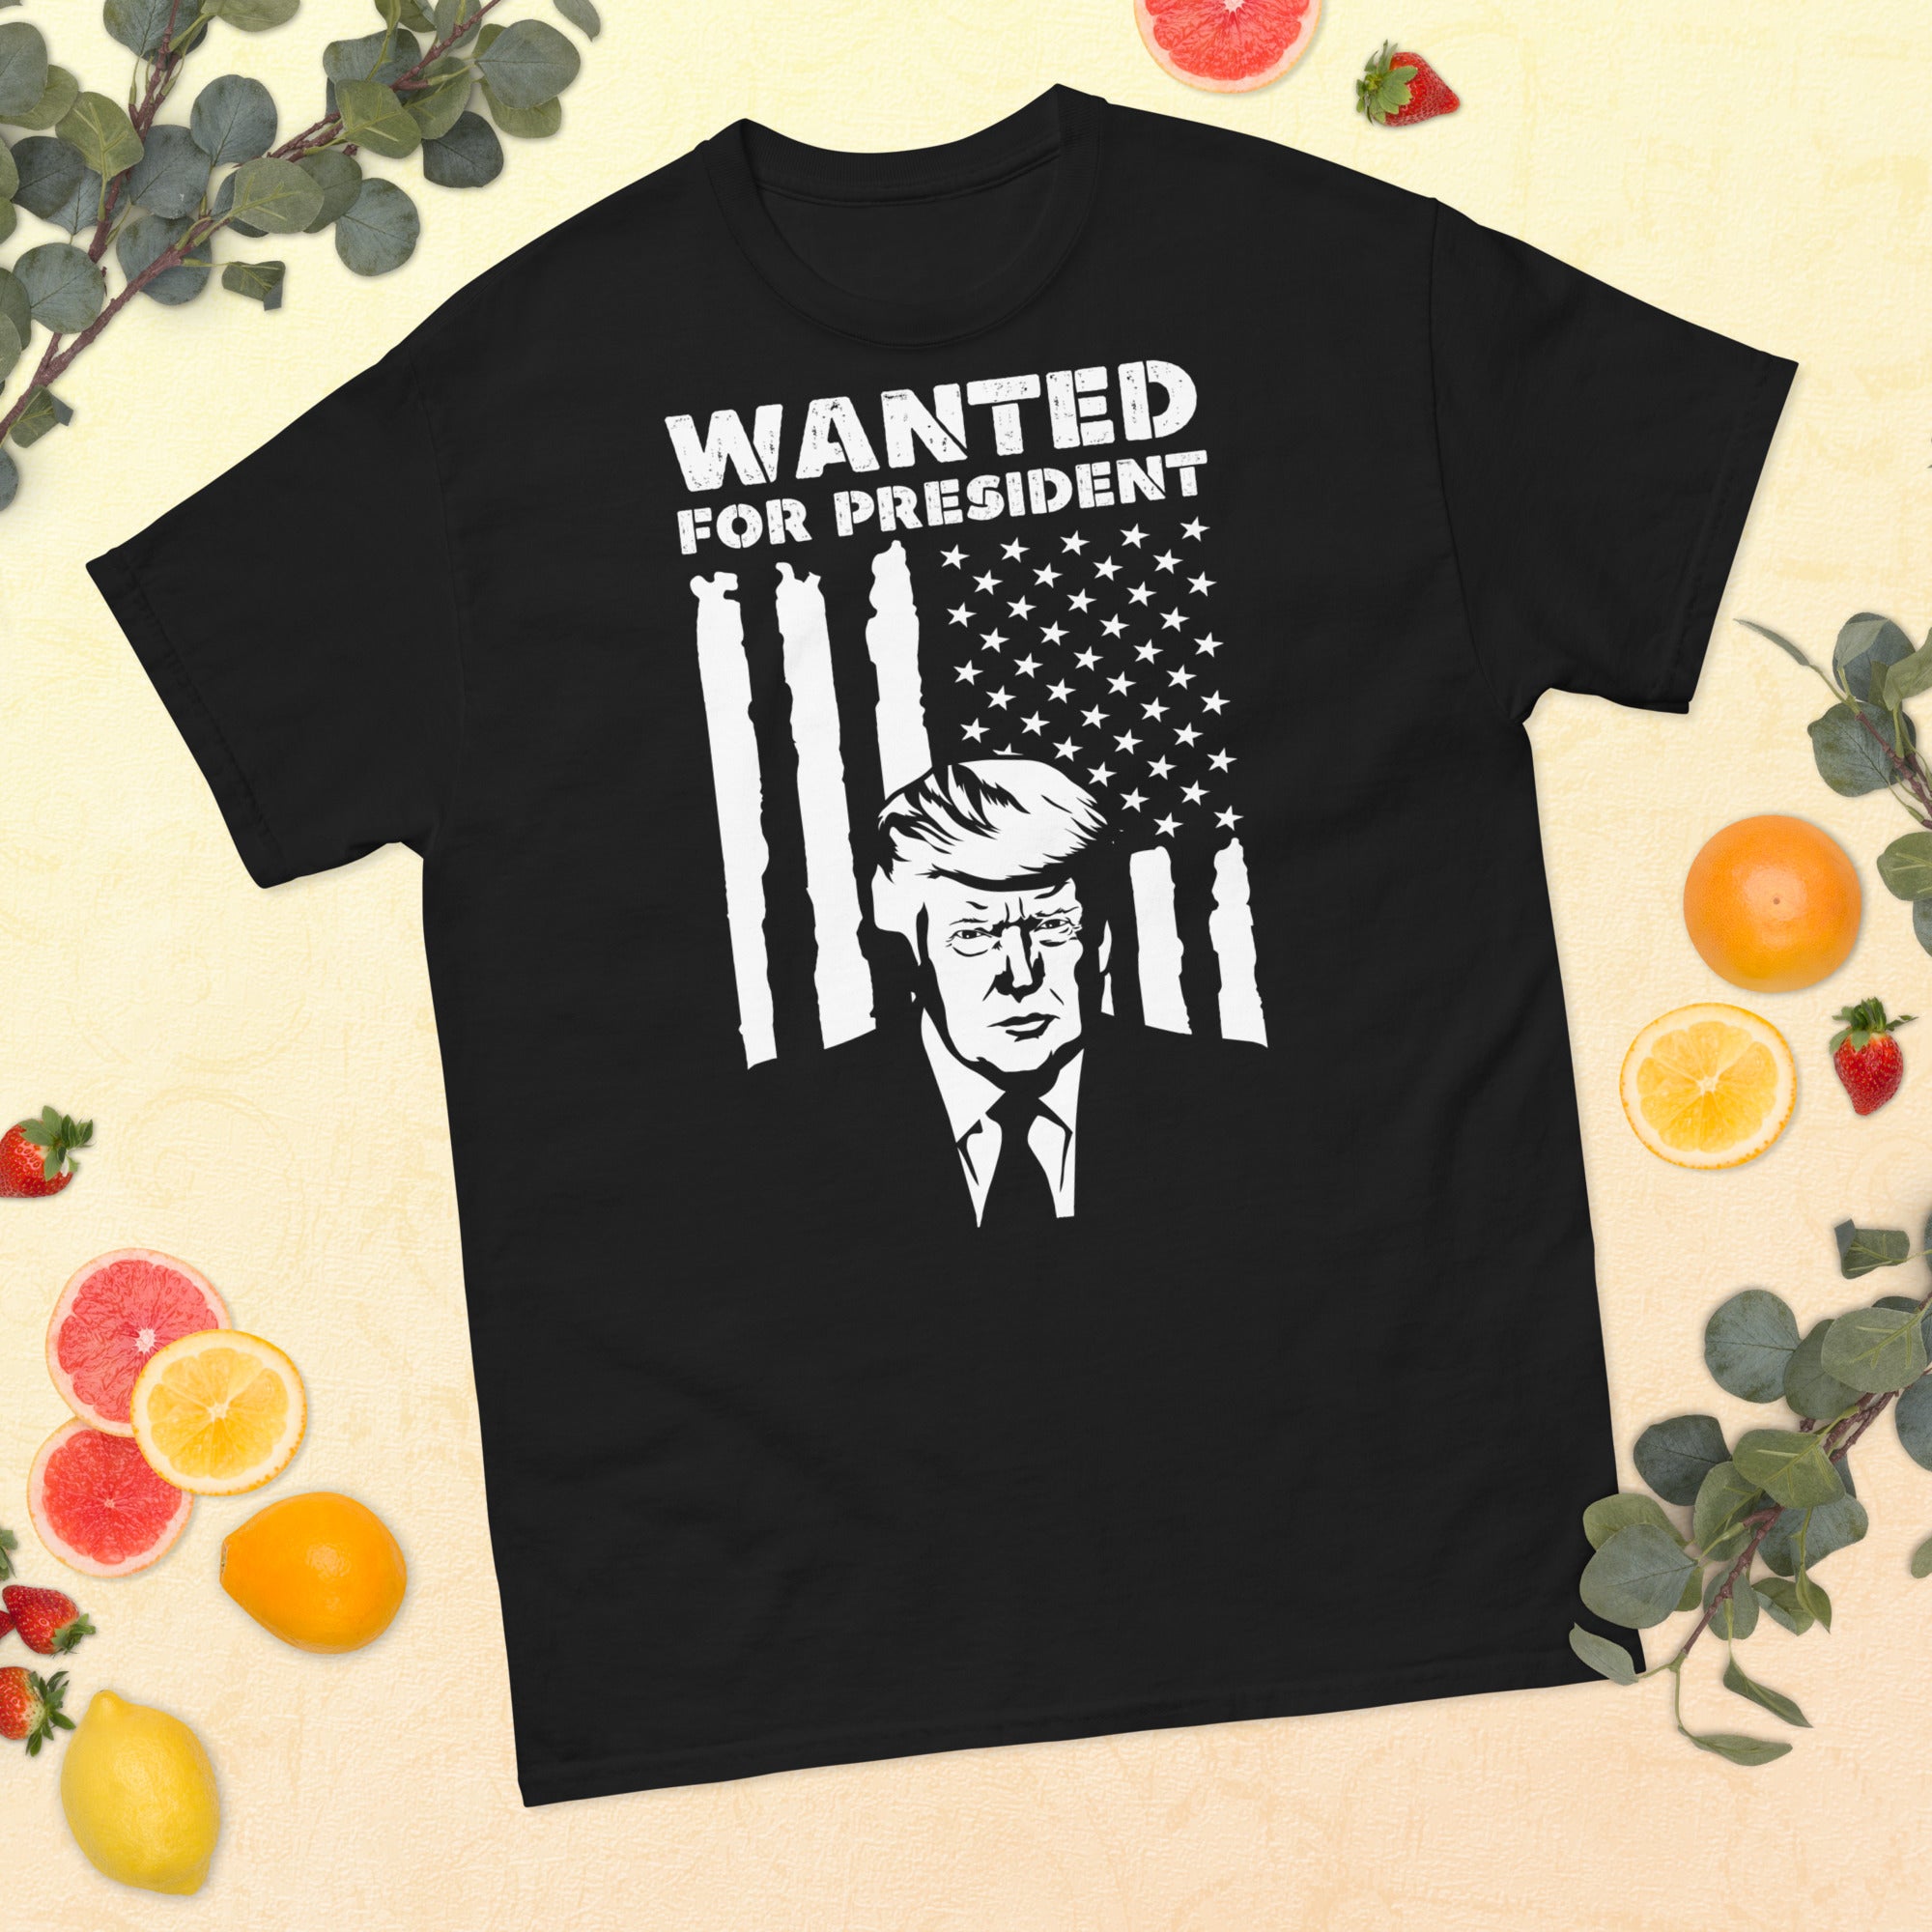 Wanted For President Trump 2024 Shirt, Republican Gift, Funny Trump Tee, White House Trump 2024 Shirt, Political TShirt, Election Shirts